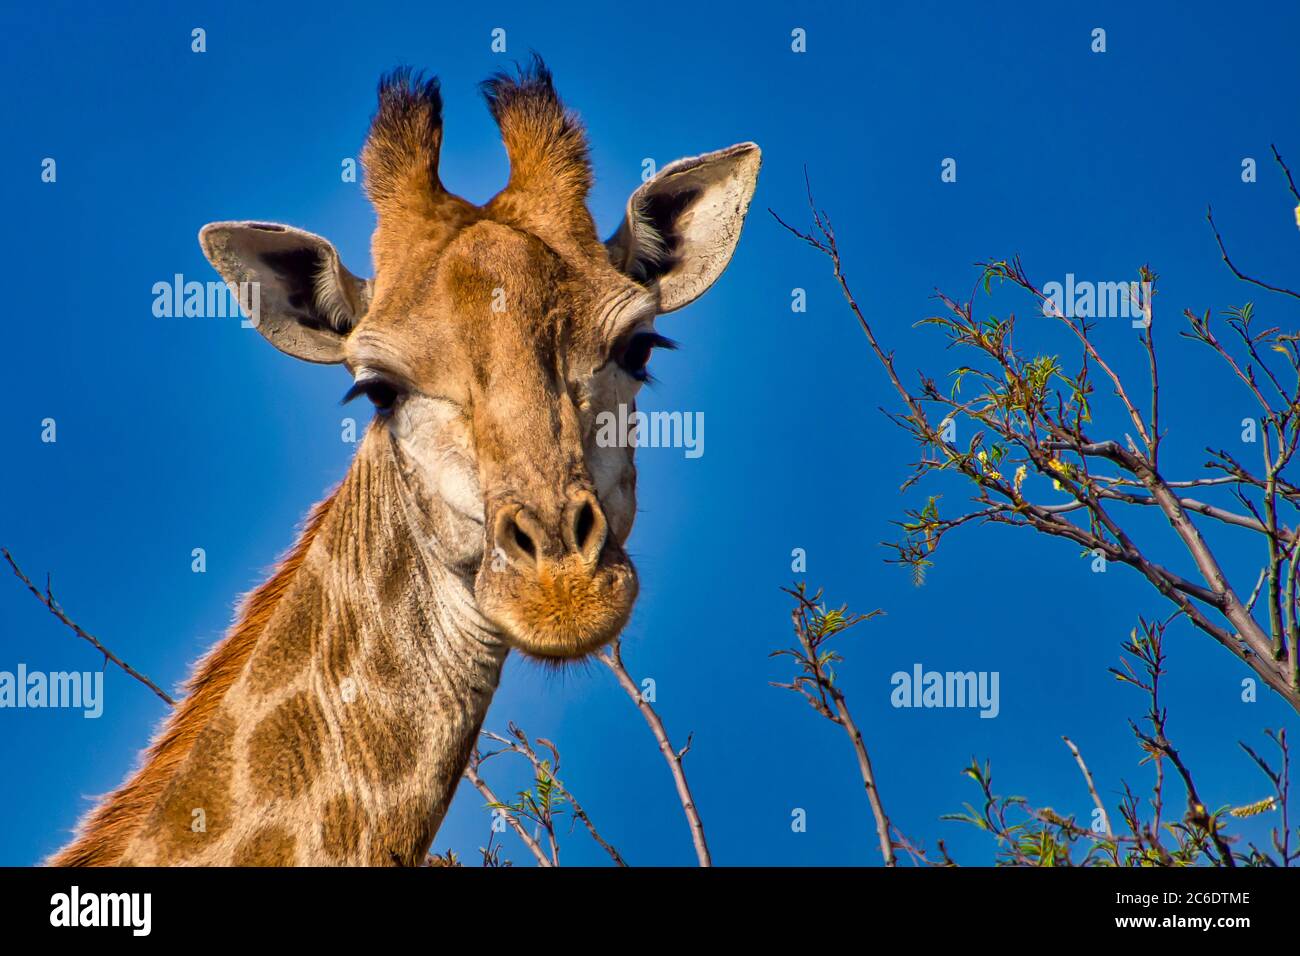 Girafe, Giraffa camelopardis, Parc national Kruger, Afrique du Sud, Afrique Banque D'Images